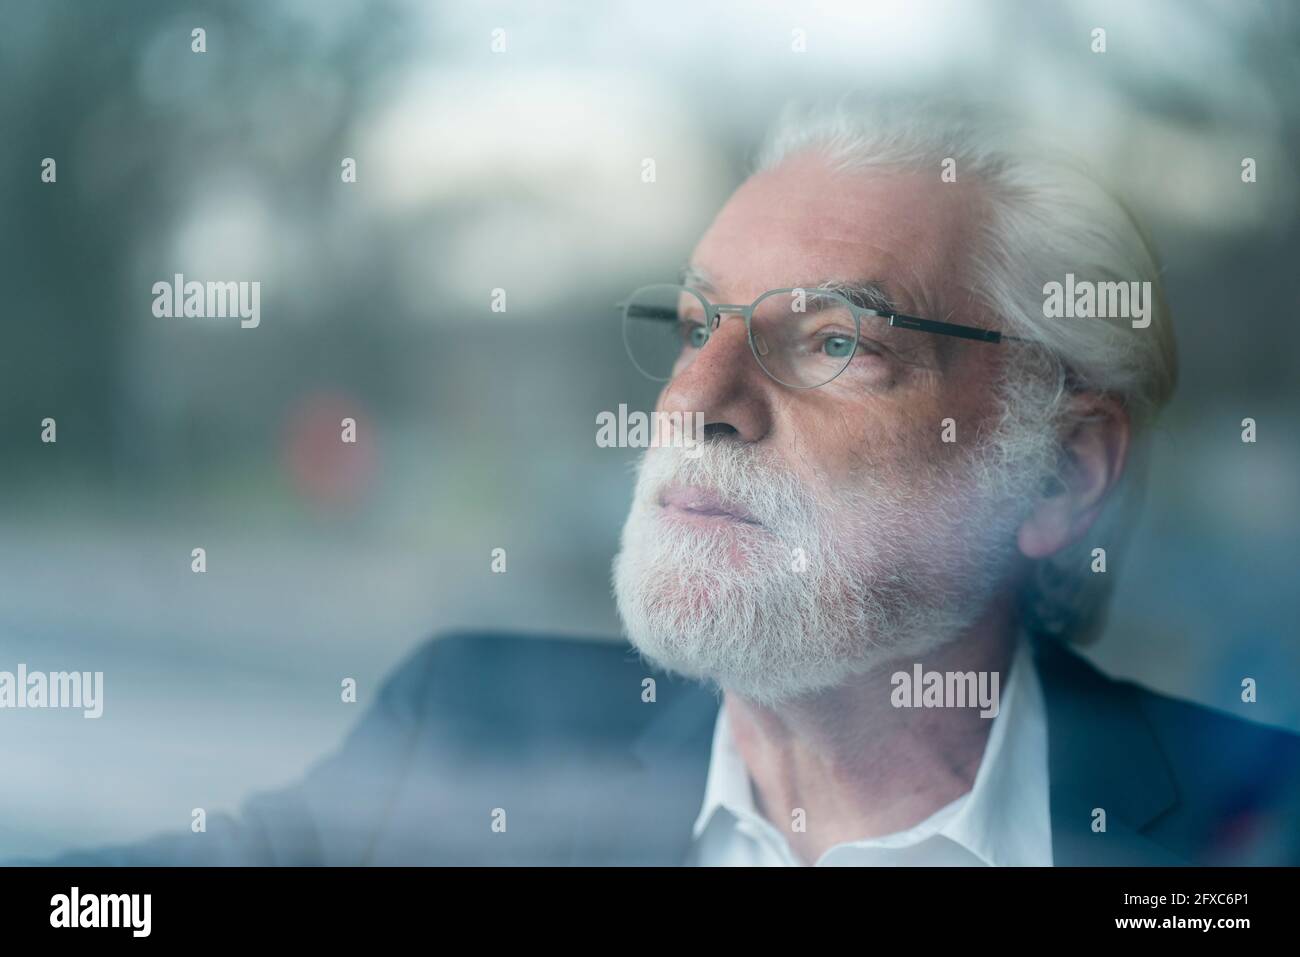 Senior businessman with gray eyes looking through window seen through glass Stock Photo